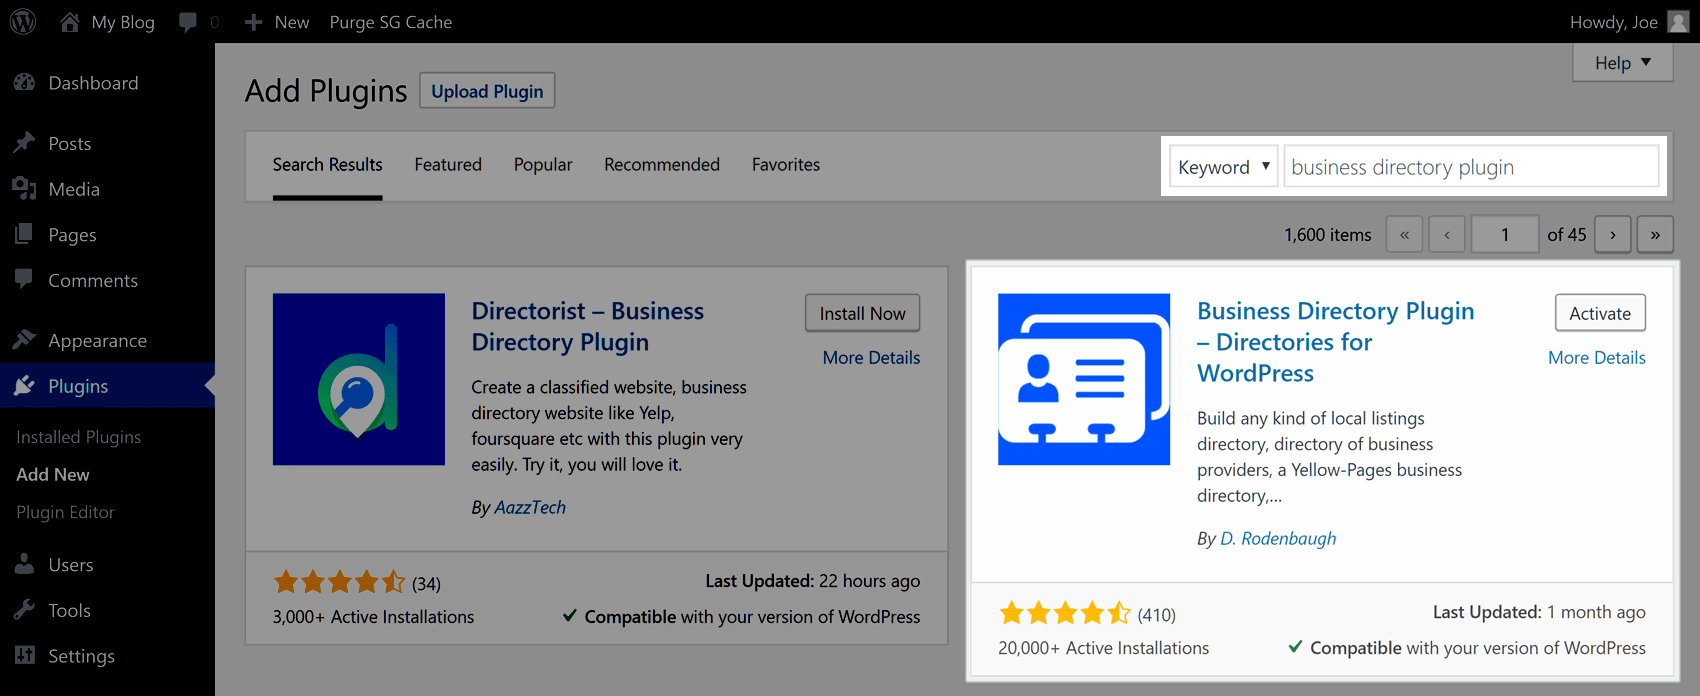 Business directory plugin integration in WordPress